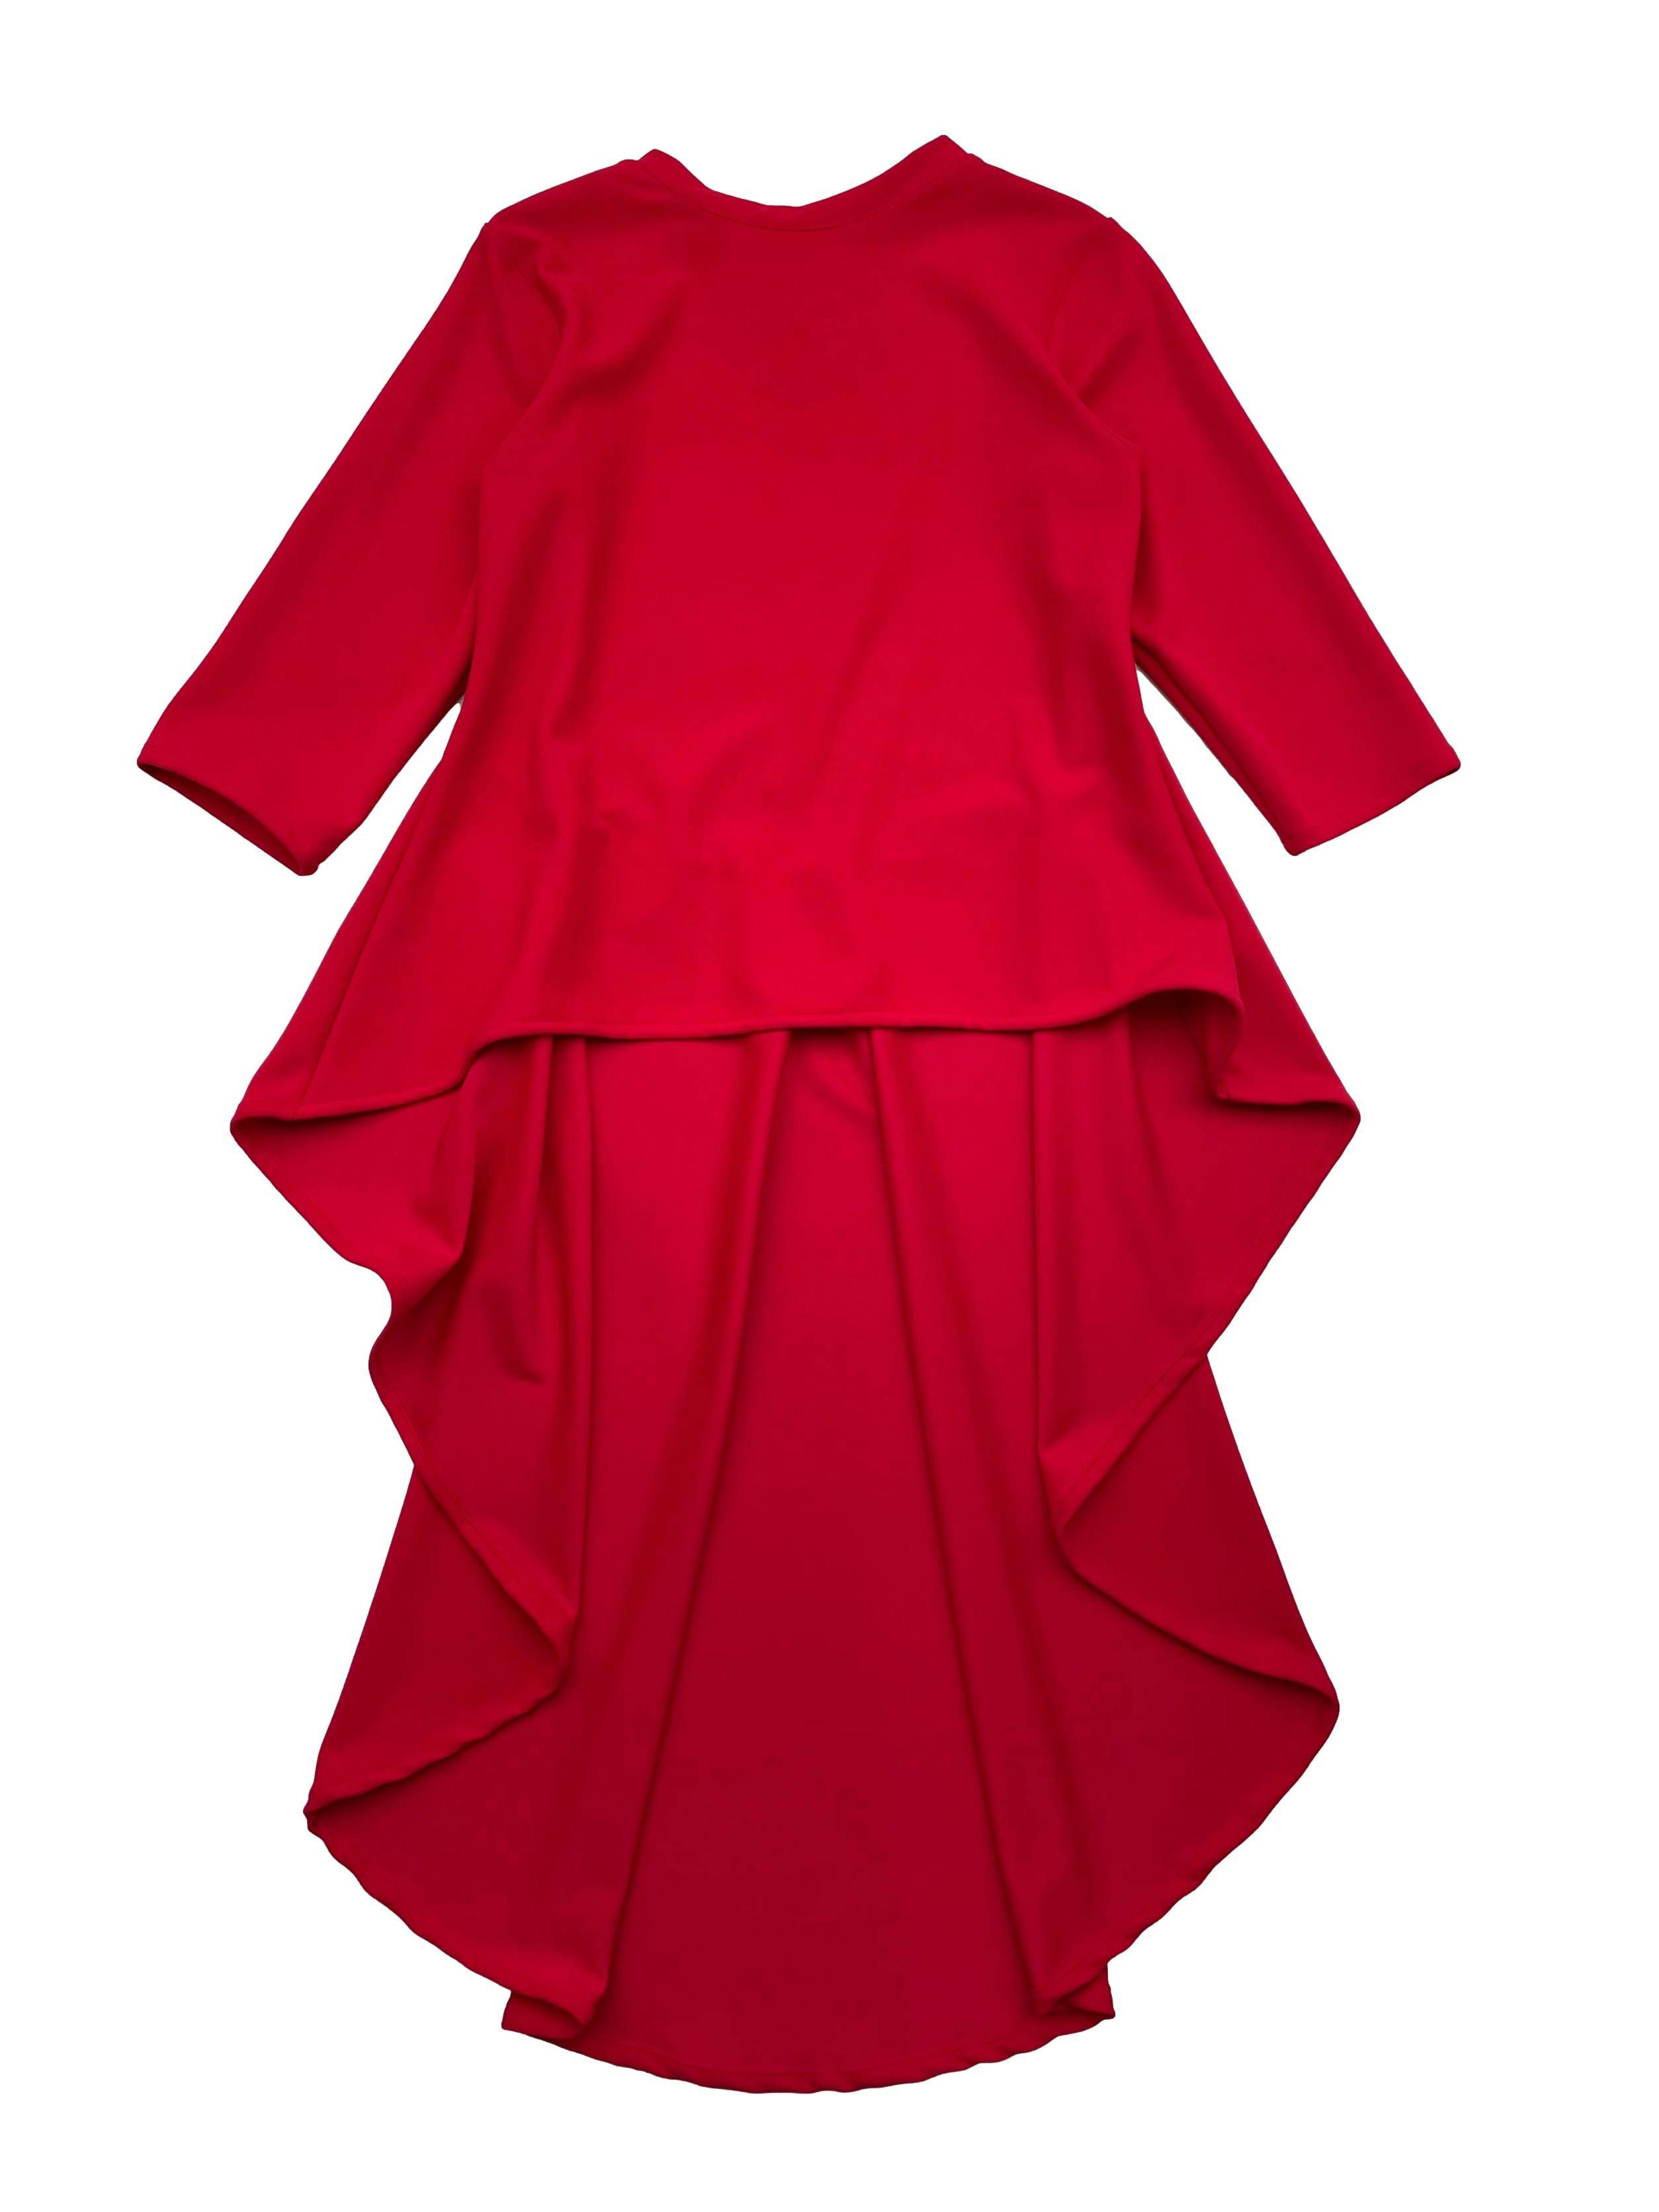 Blusa ChaCha roja, manga 3/4, asimétrica con cola y pliegues. Busto: 90cm, Largo 49-105cm